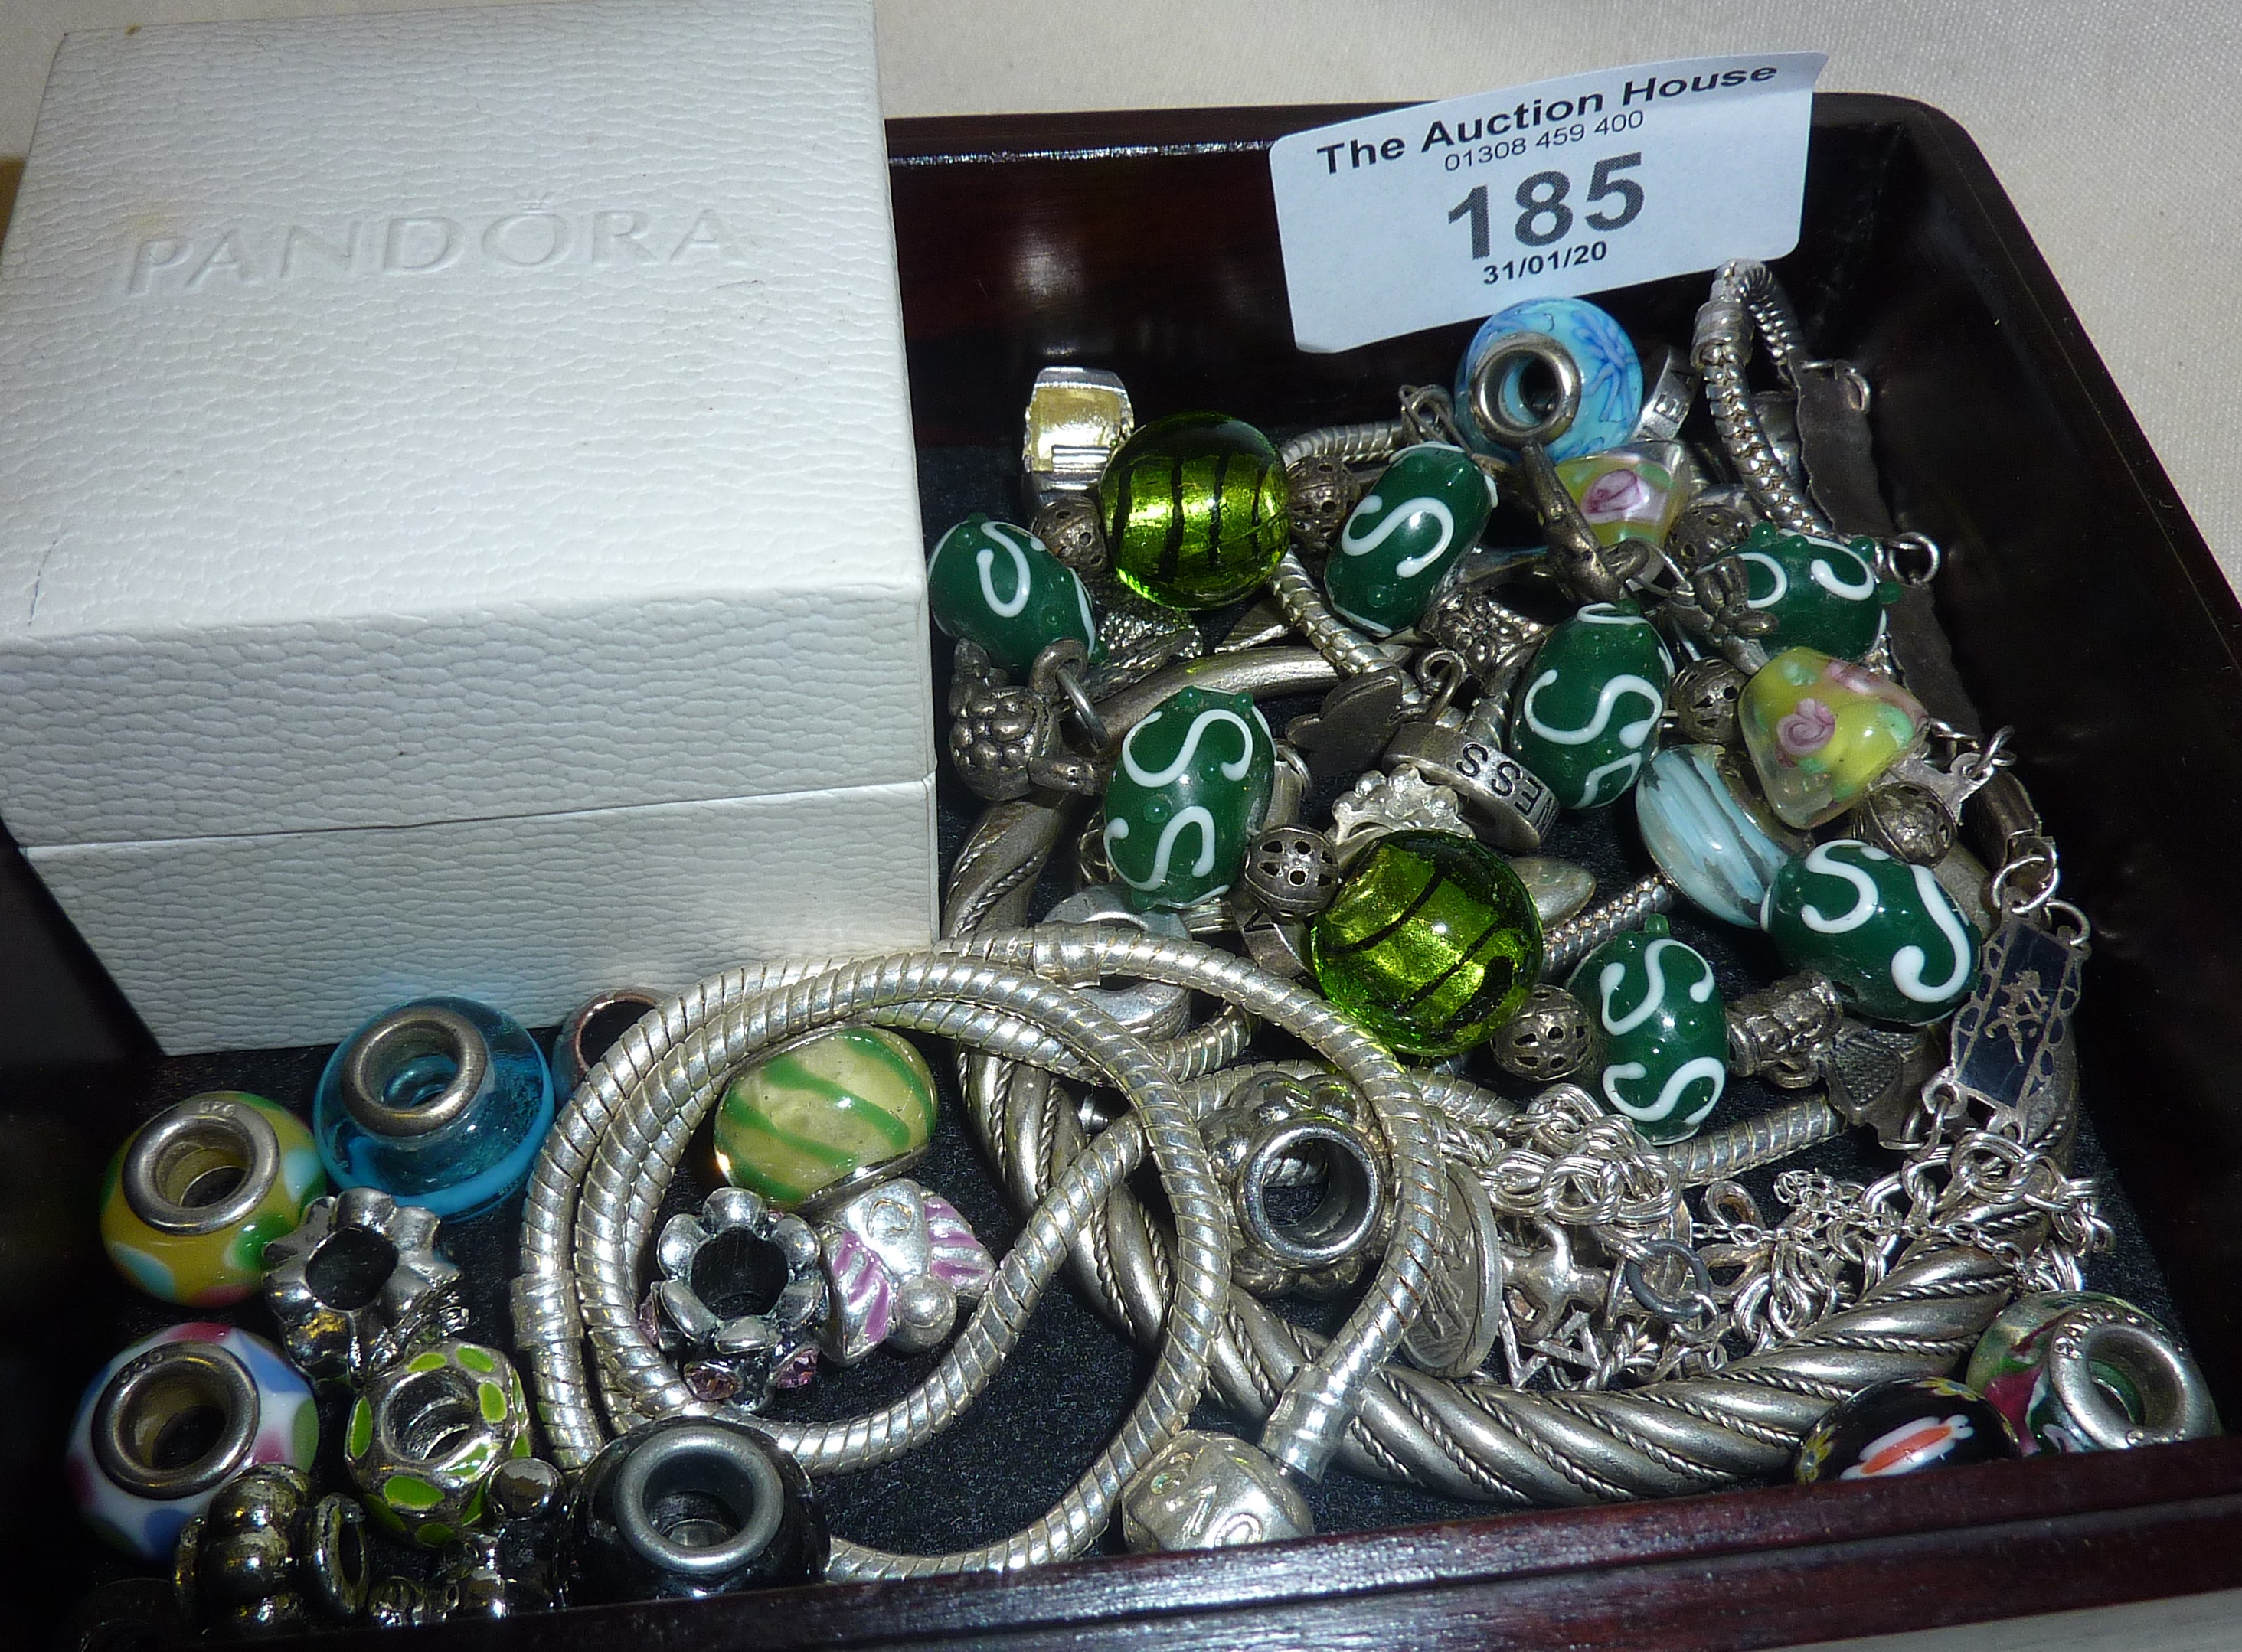 Pandora type glass charms, bracelets, etc., inc. a Sterling silver charm bracelet and 925 silver